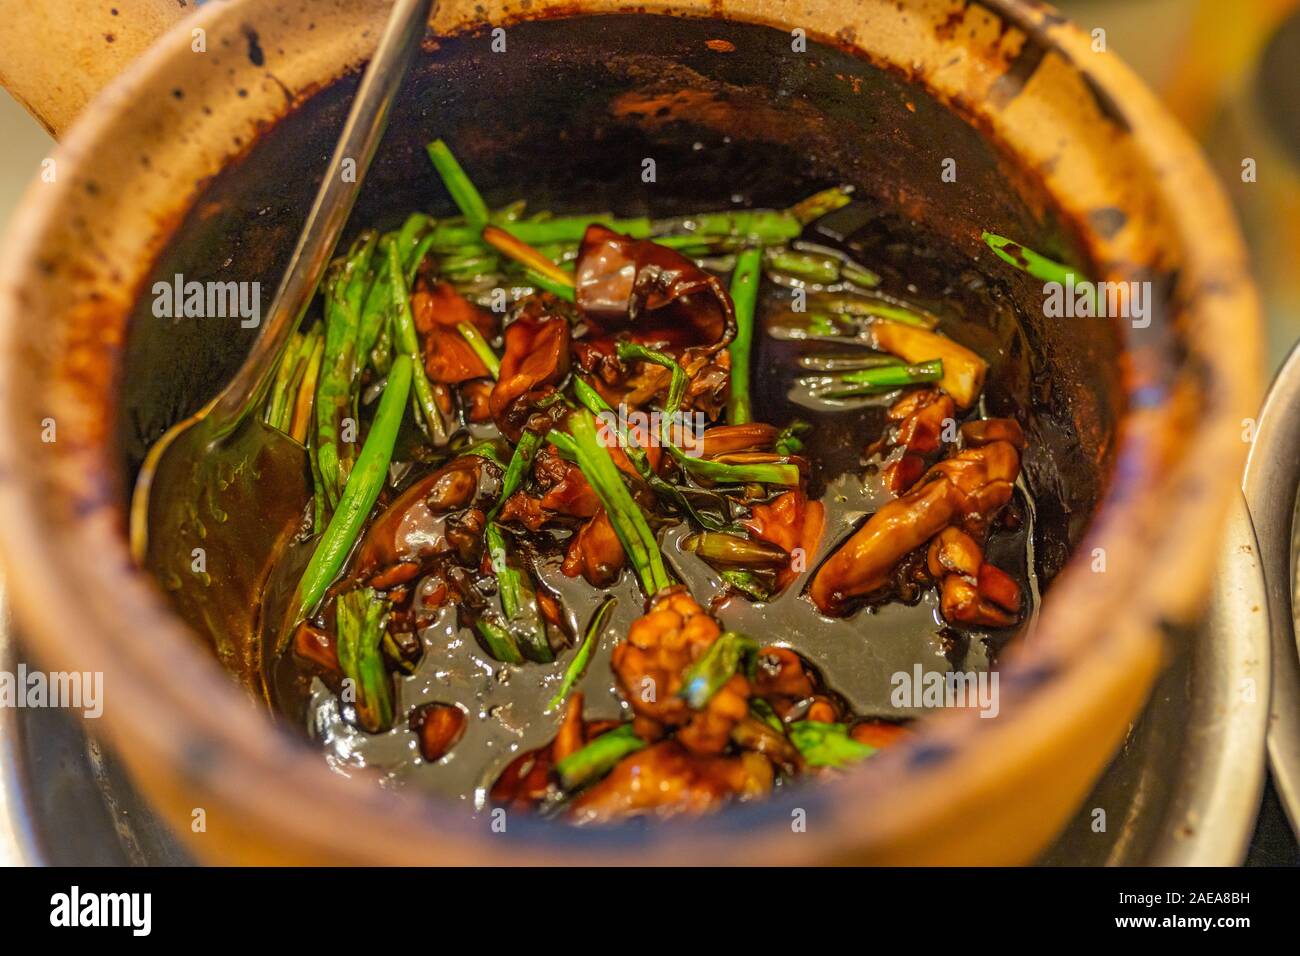 Singapore frog porridge served in clay pot Stock Photo